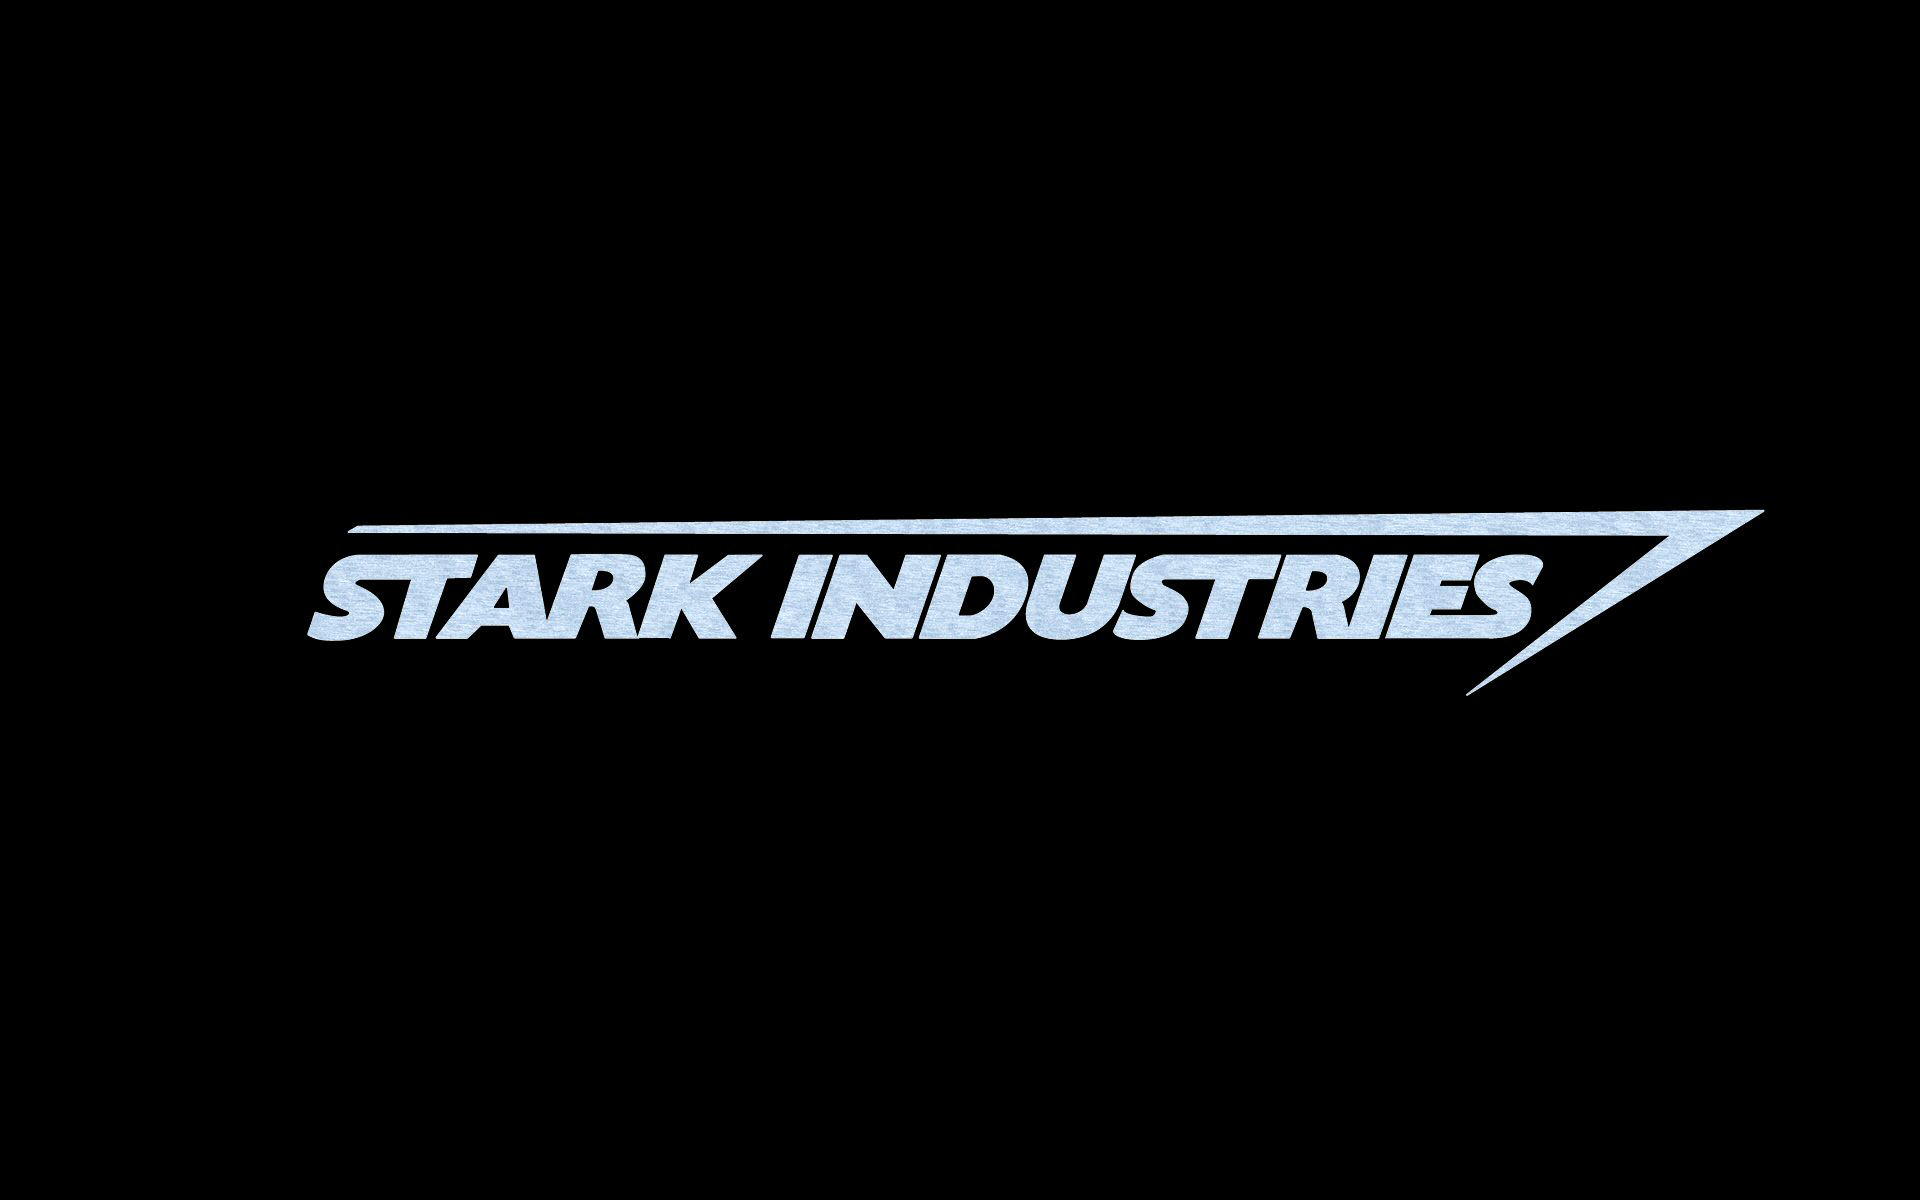 stark industries wallpaper,text,black,font,logo,brand